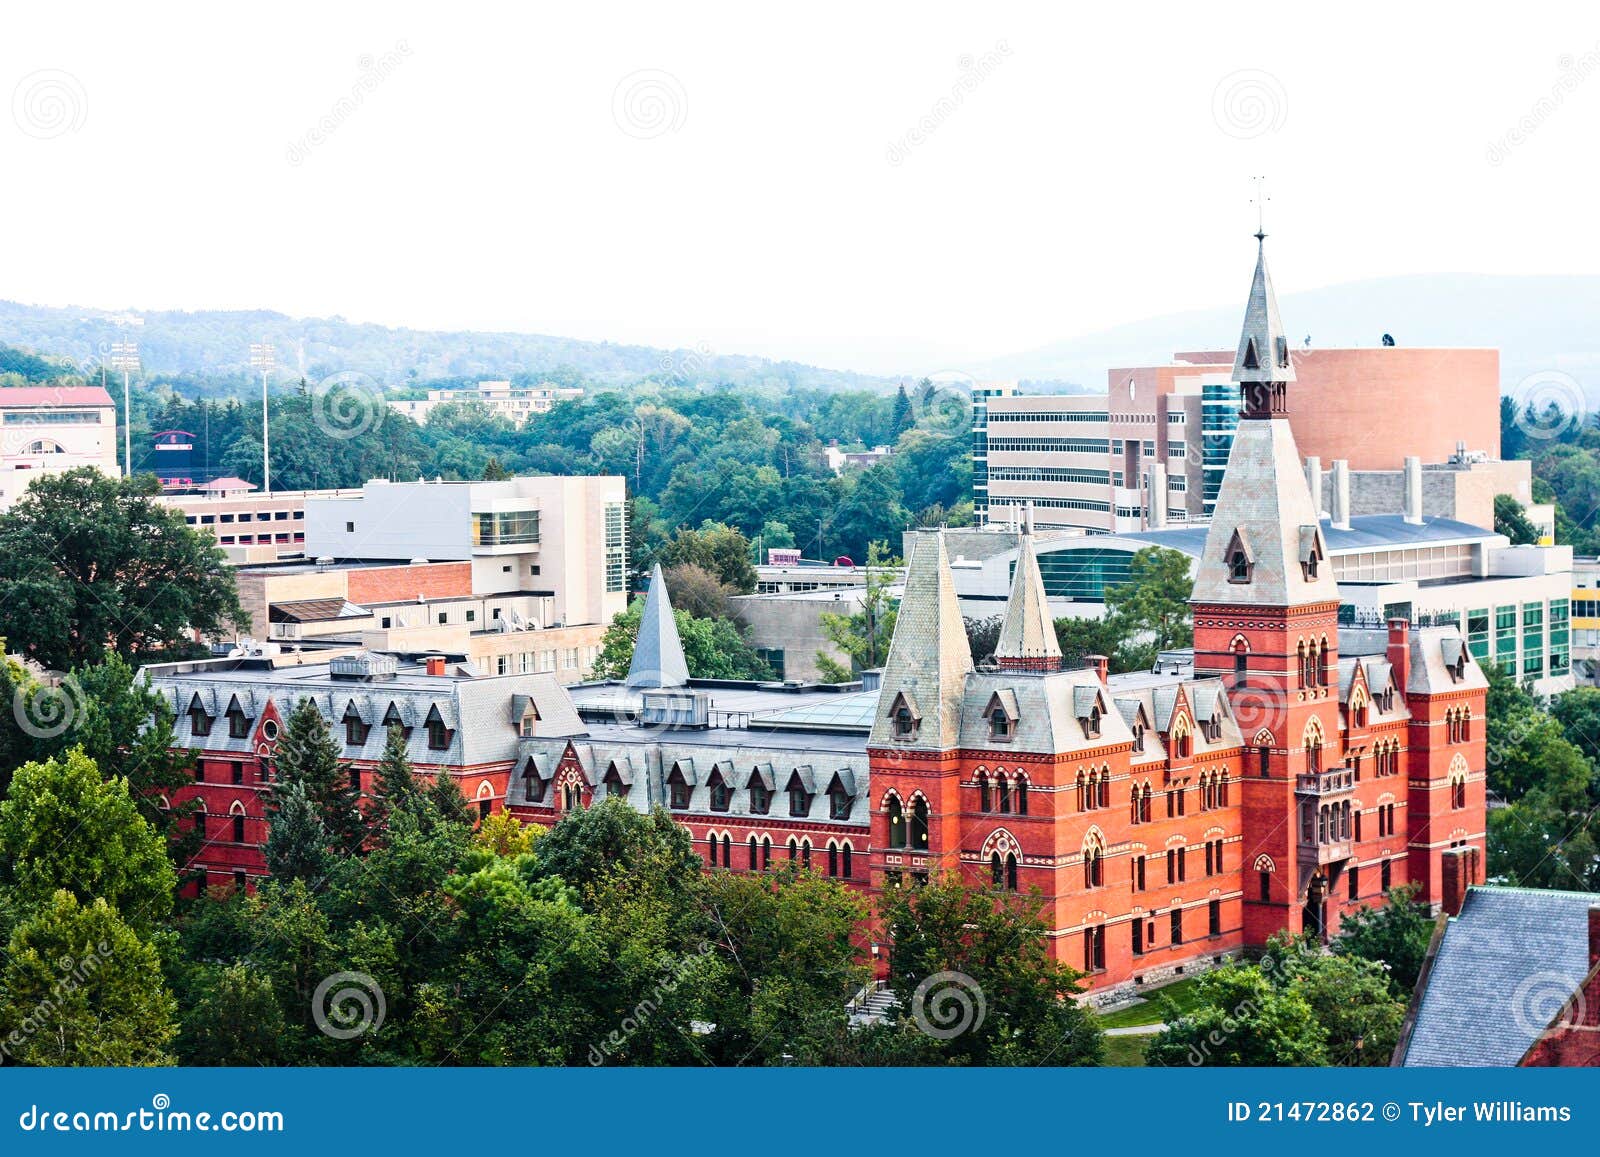 Cornell University stock photo. Image of color, college - 21472862